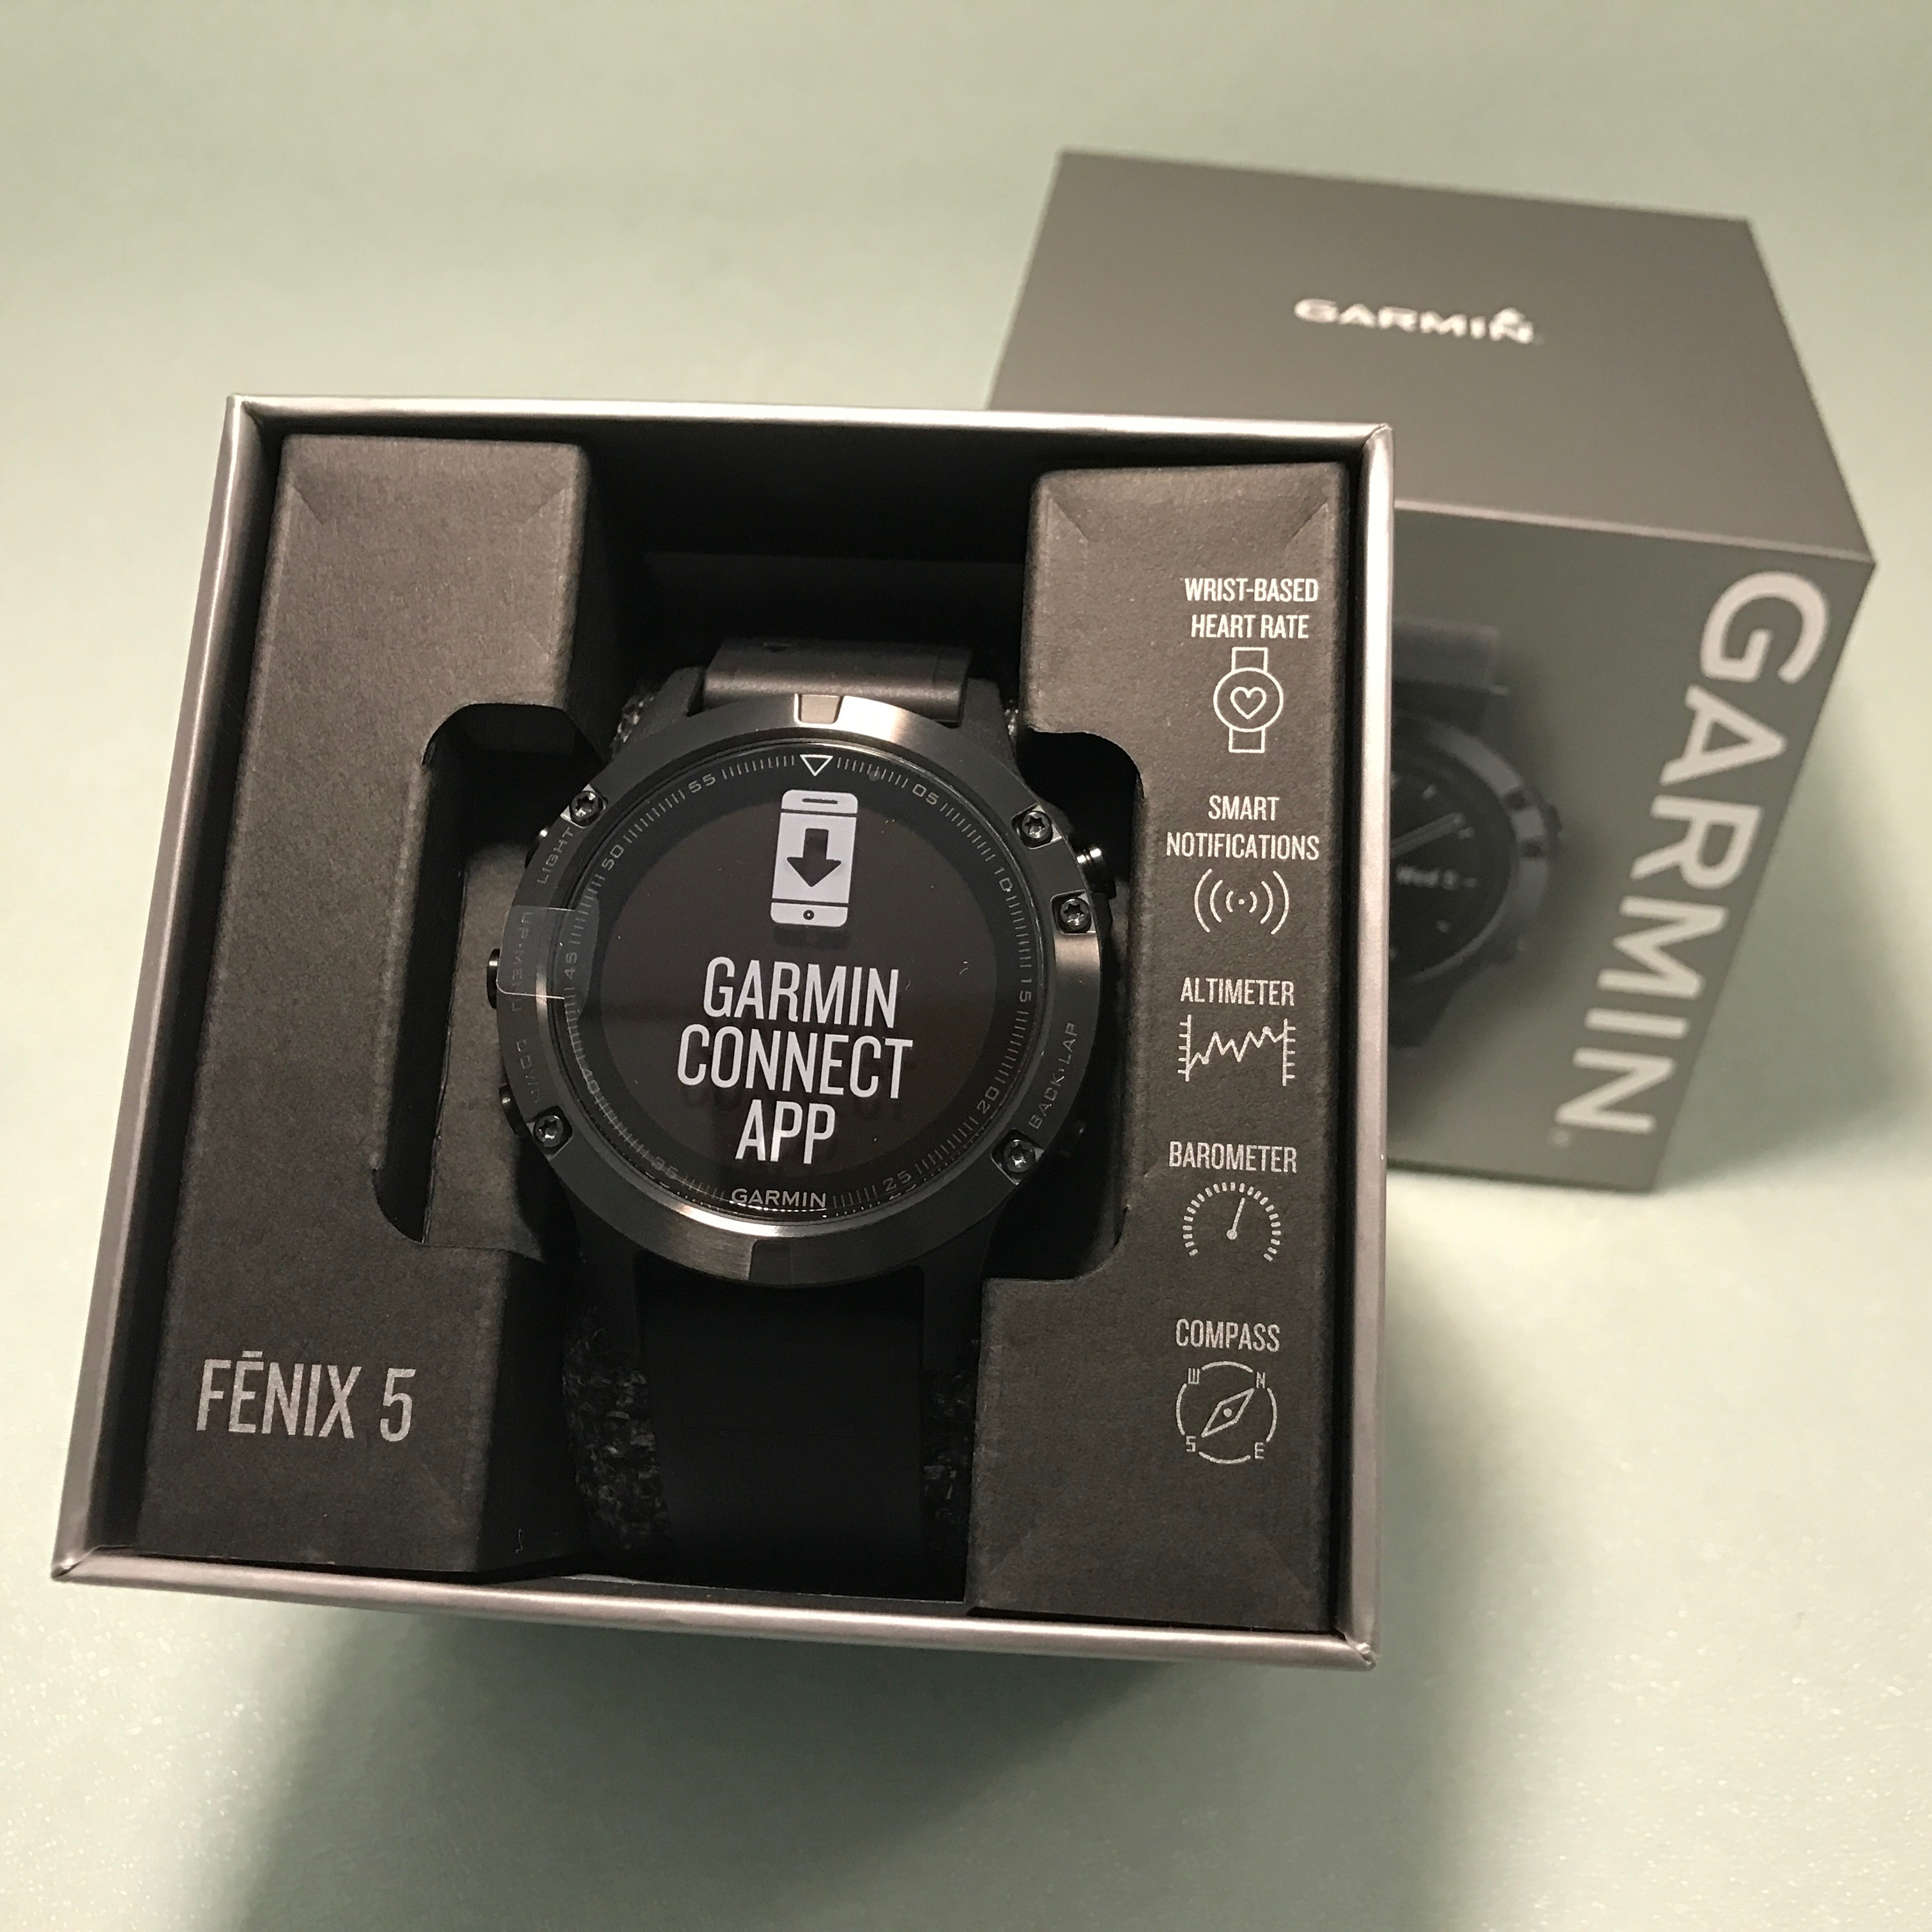 Garmin's new Fenix 5 smartwatch aims be the leader in fitness wearables ...